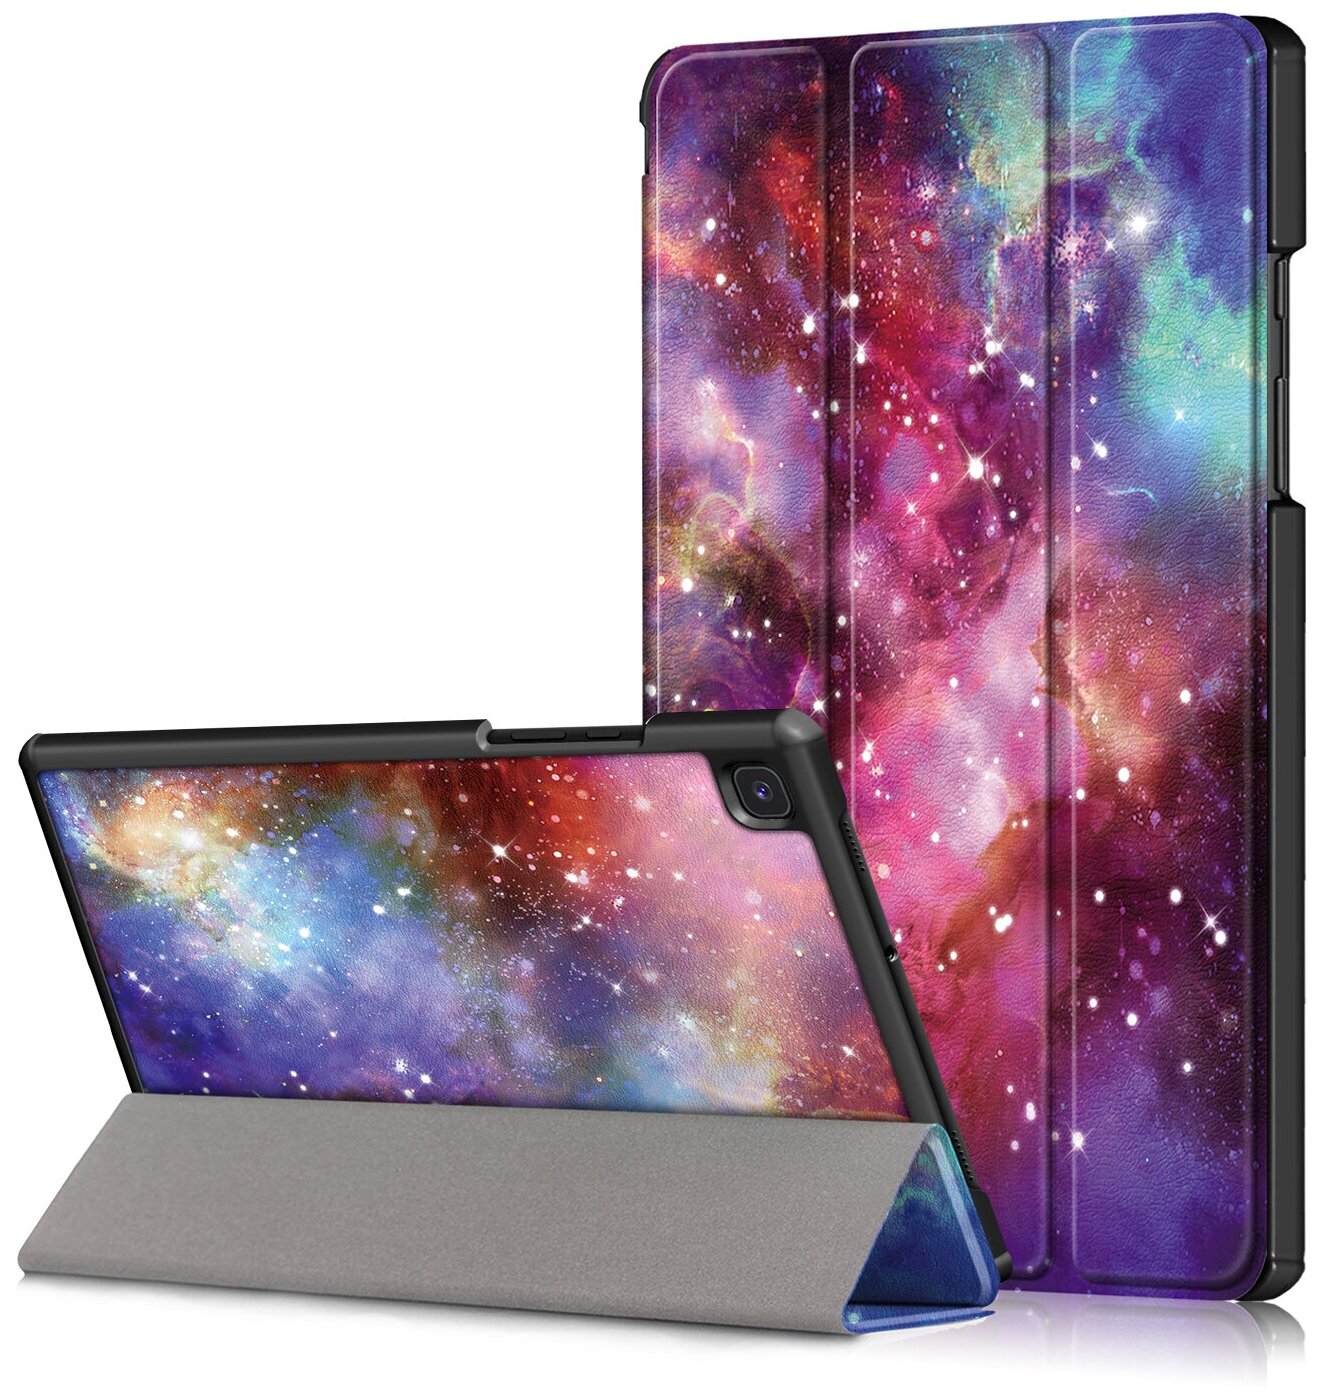 Чехол IT BAGGAGE для планшета SAMSUNG Galaxy Tab A7 10.4 2020 T505/T500/T507 фиолетовый с рисунком